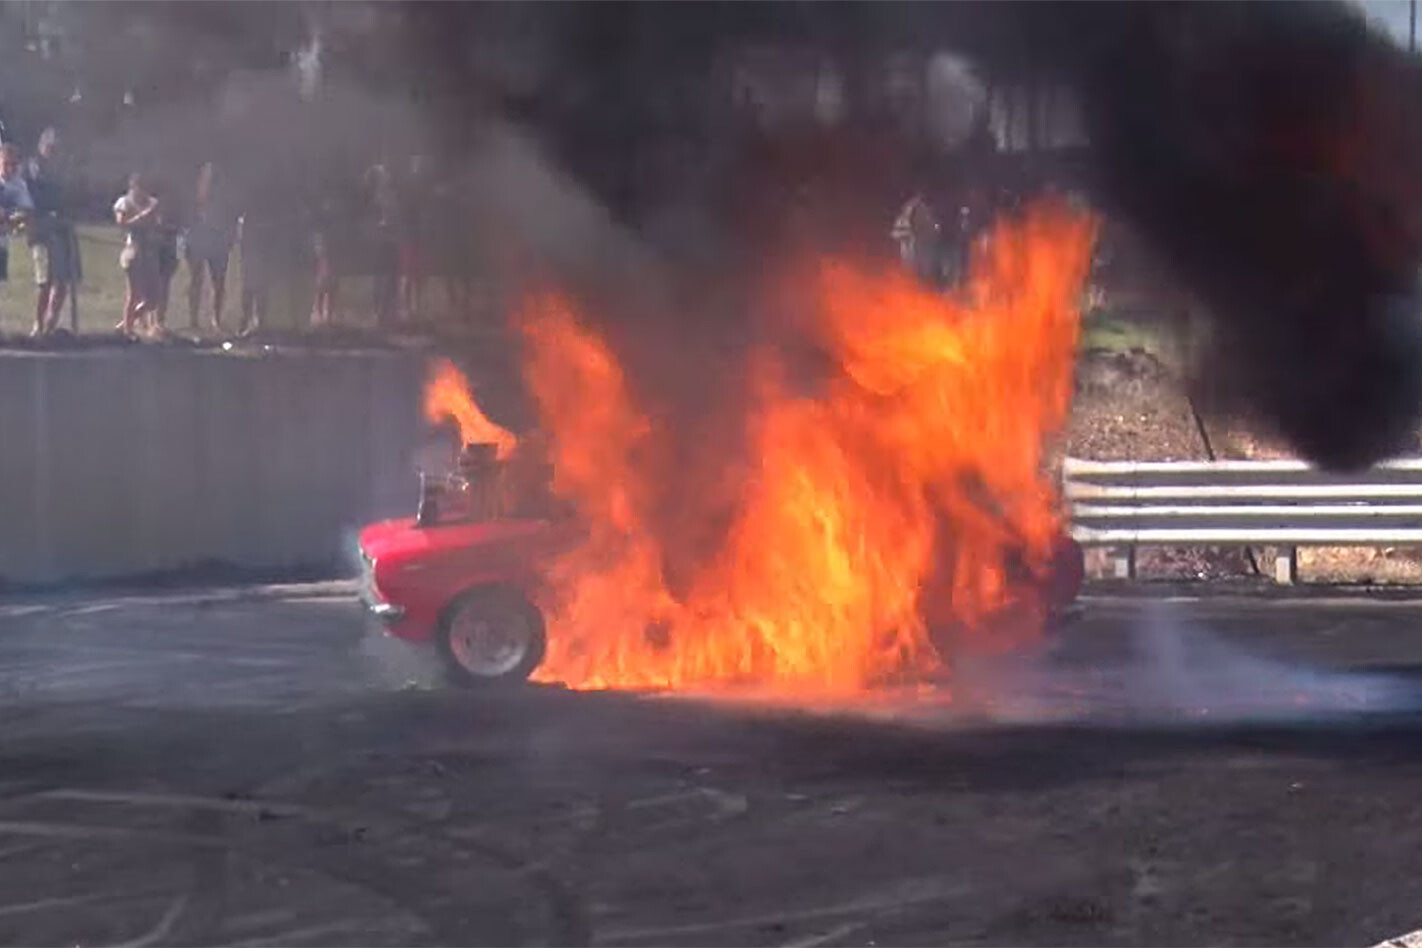 VIDEO: MASSIVE BURNOUT FIRE AT BRASHERNATS